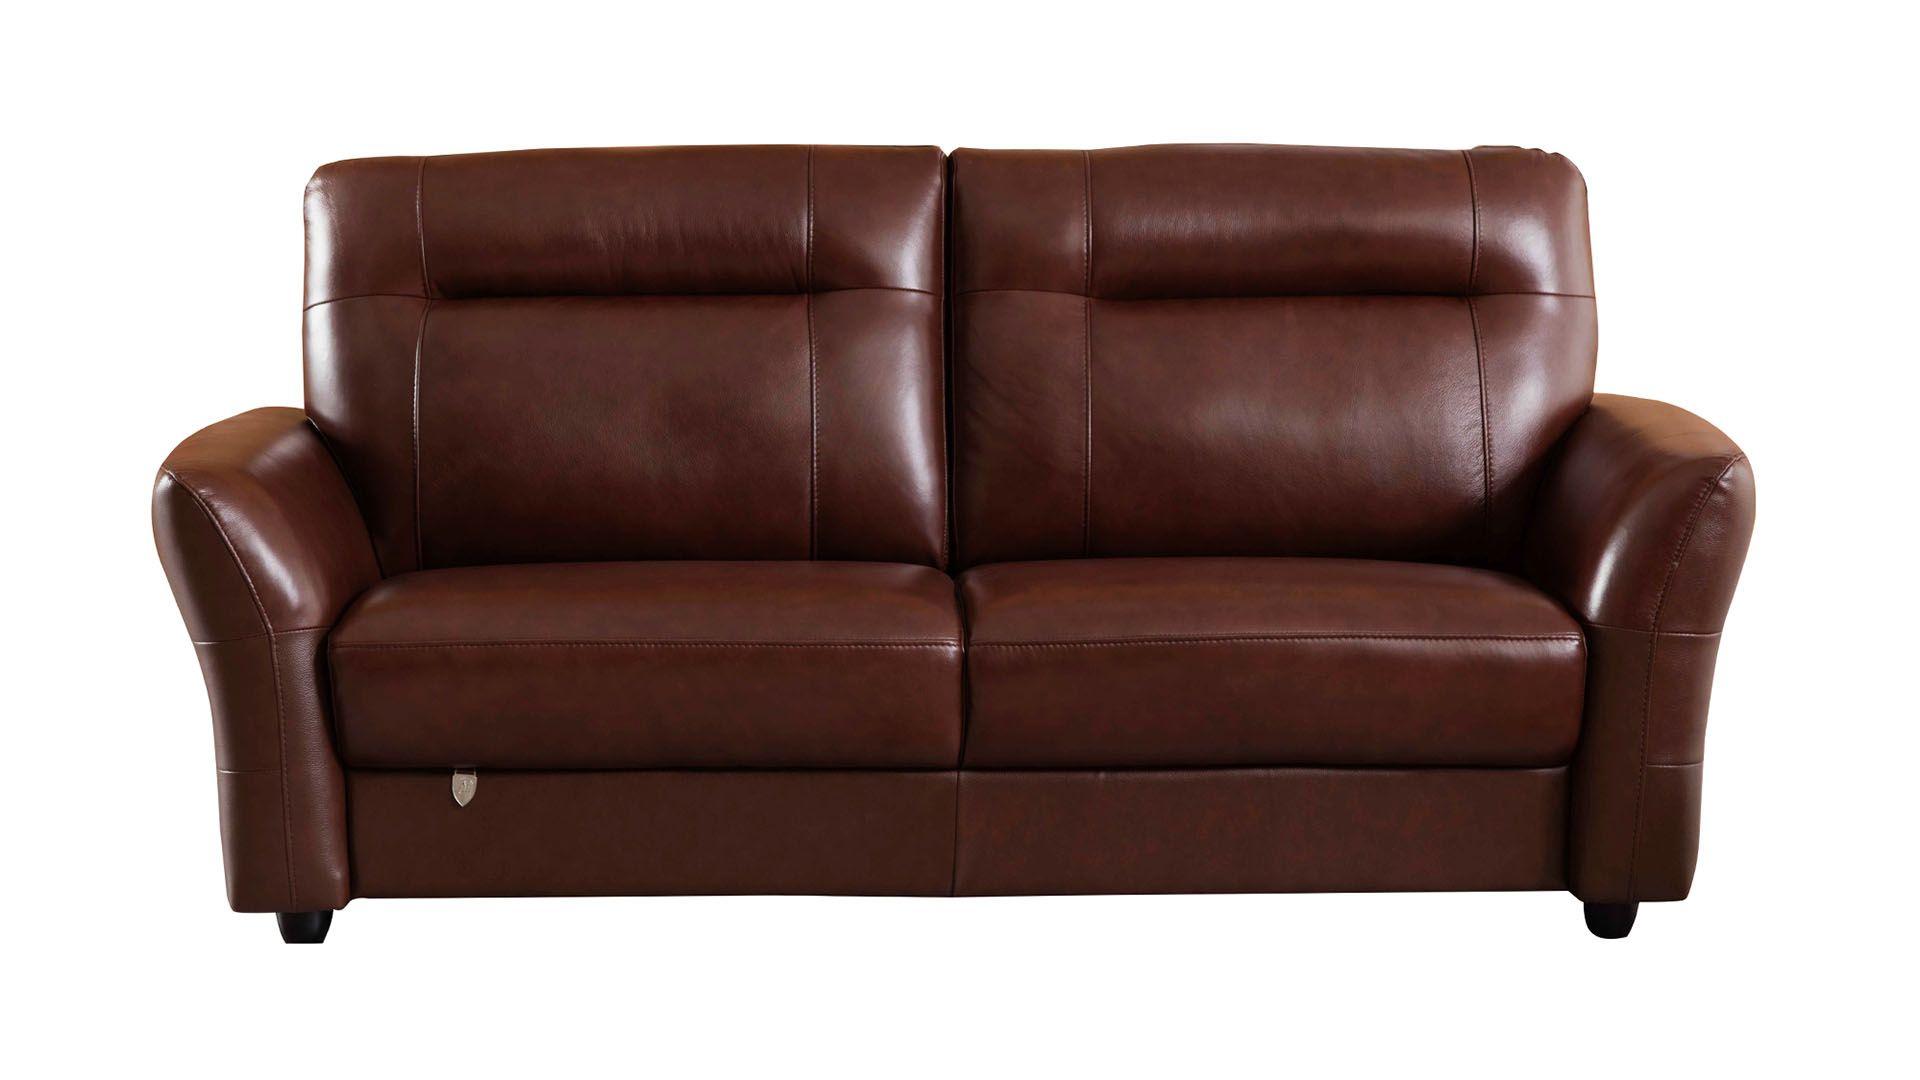 Contemporary, Modern Sofa EK090-BR EK090-BR-SF in Brown Italian Leather